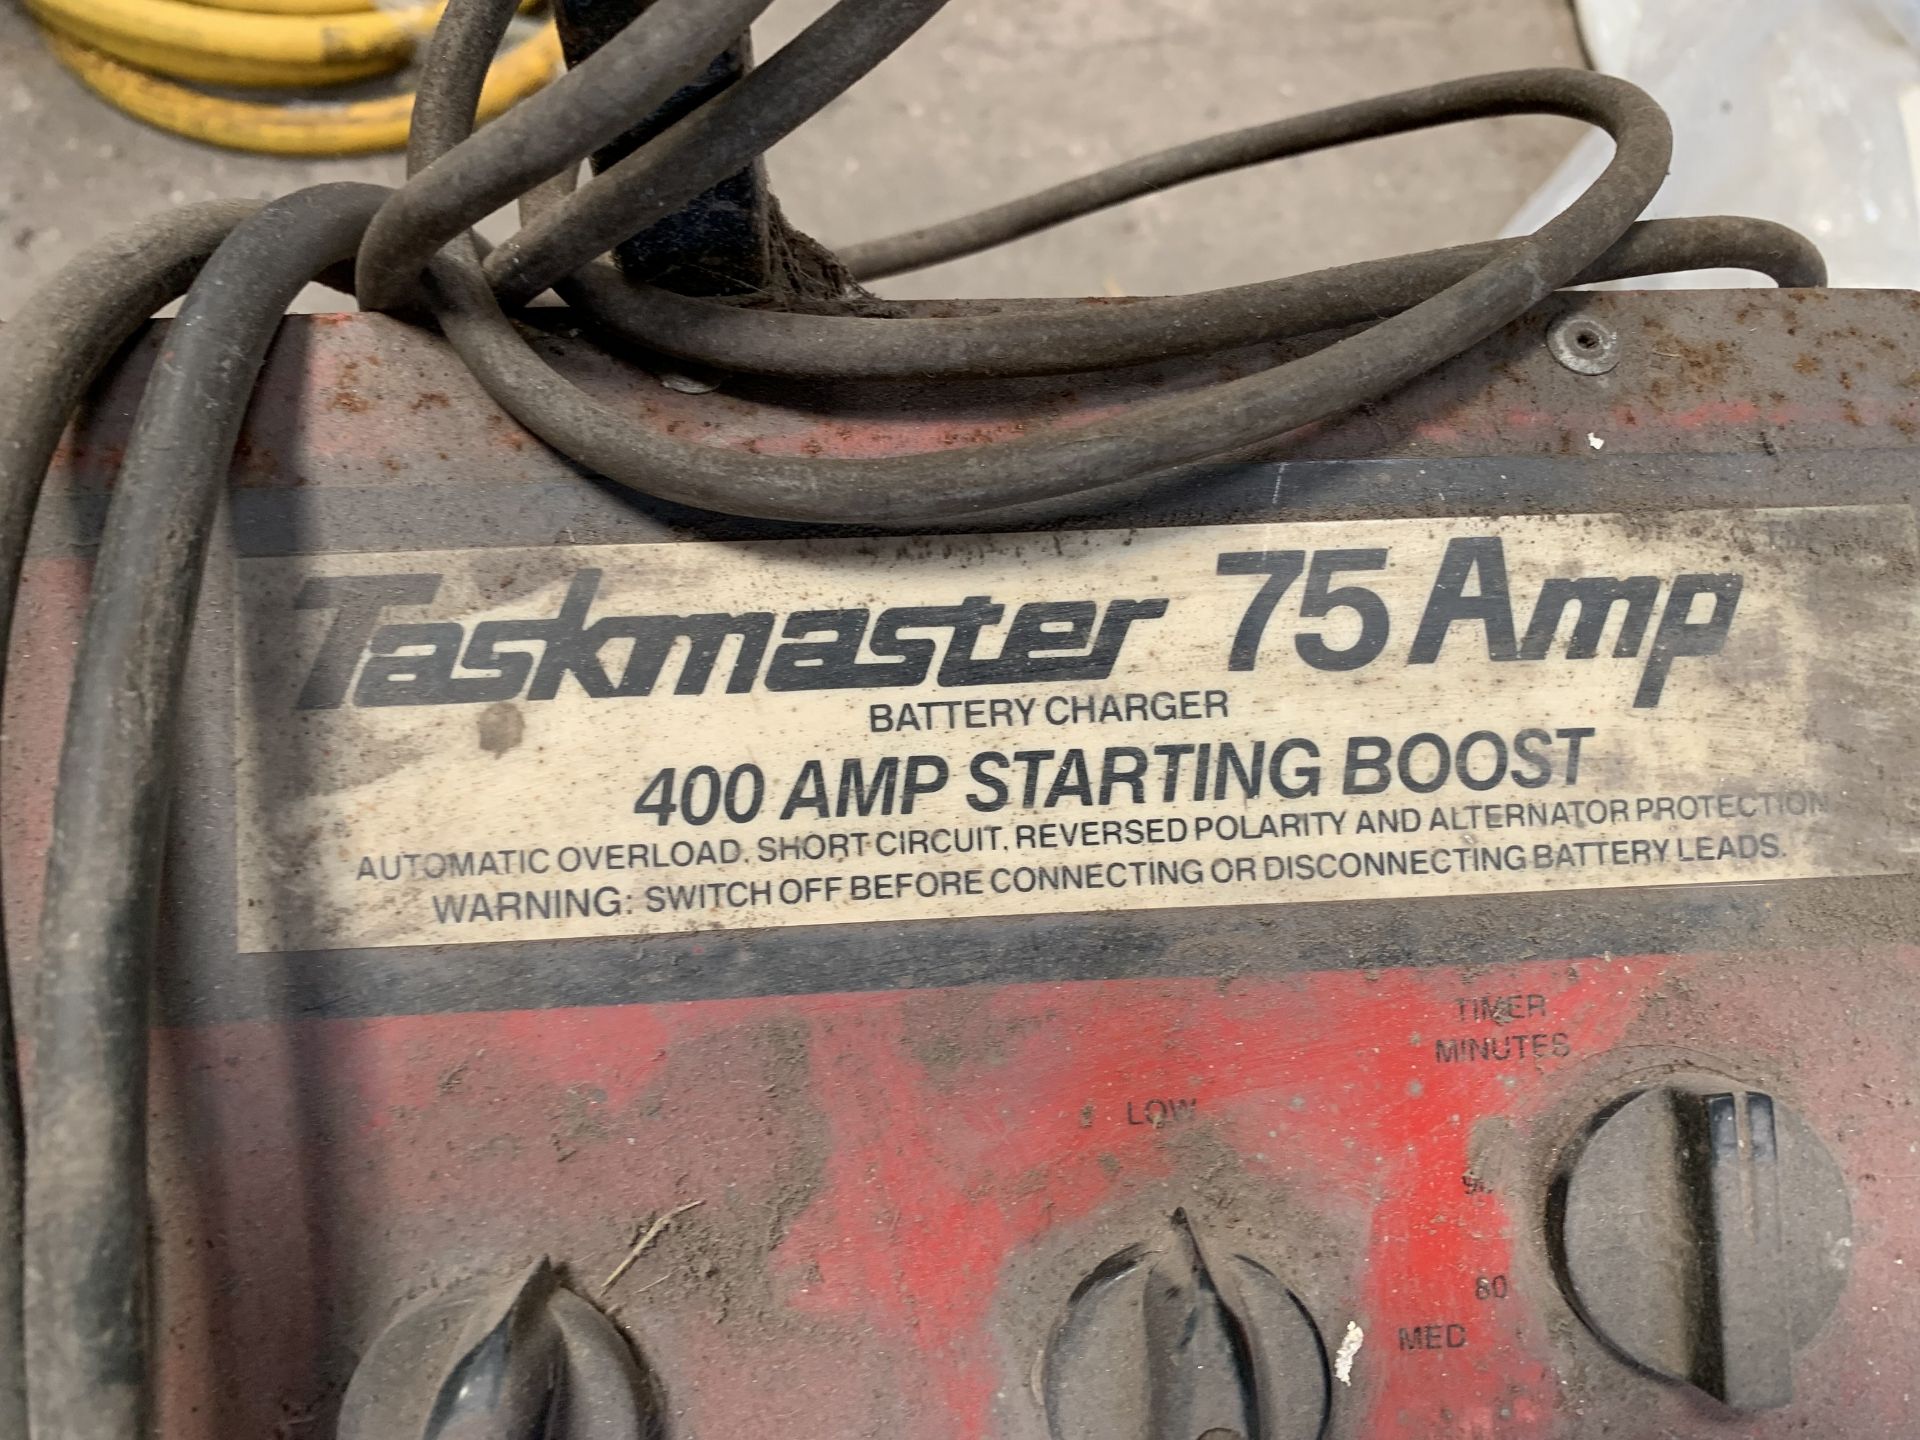 Taskmaster 400 amp starting booster pack - Image 2 of 2